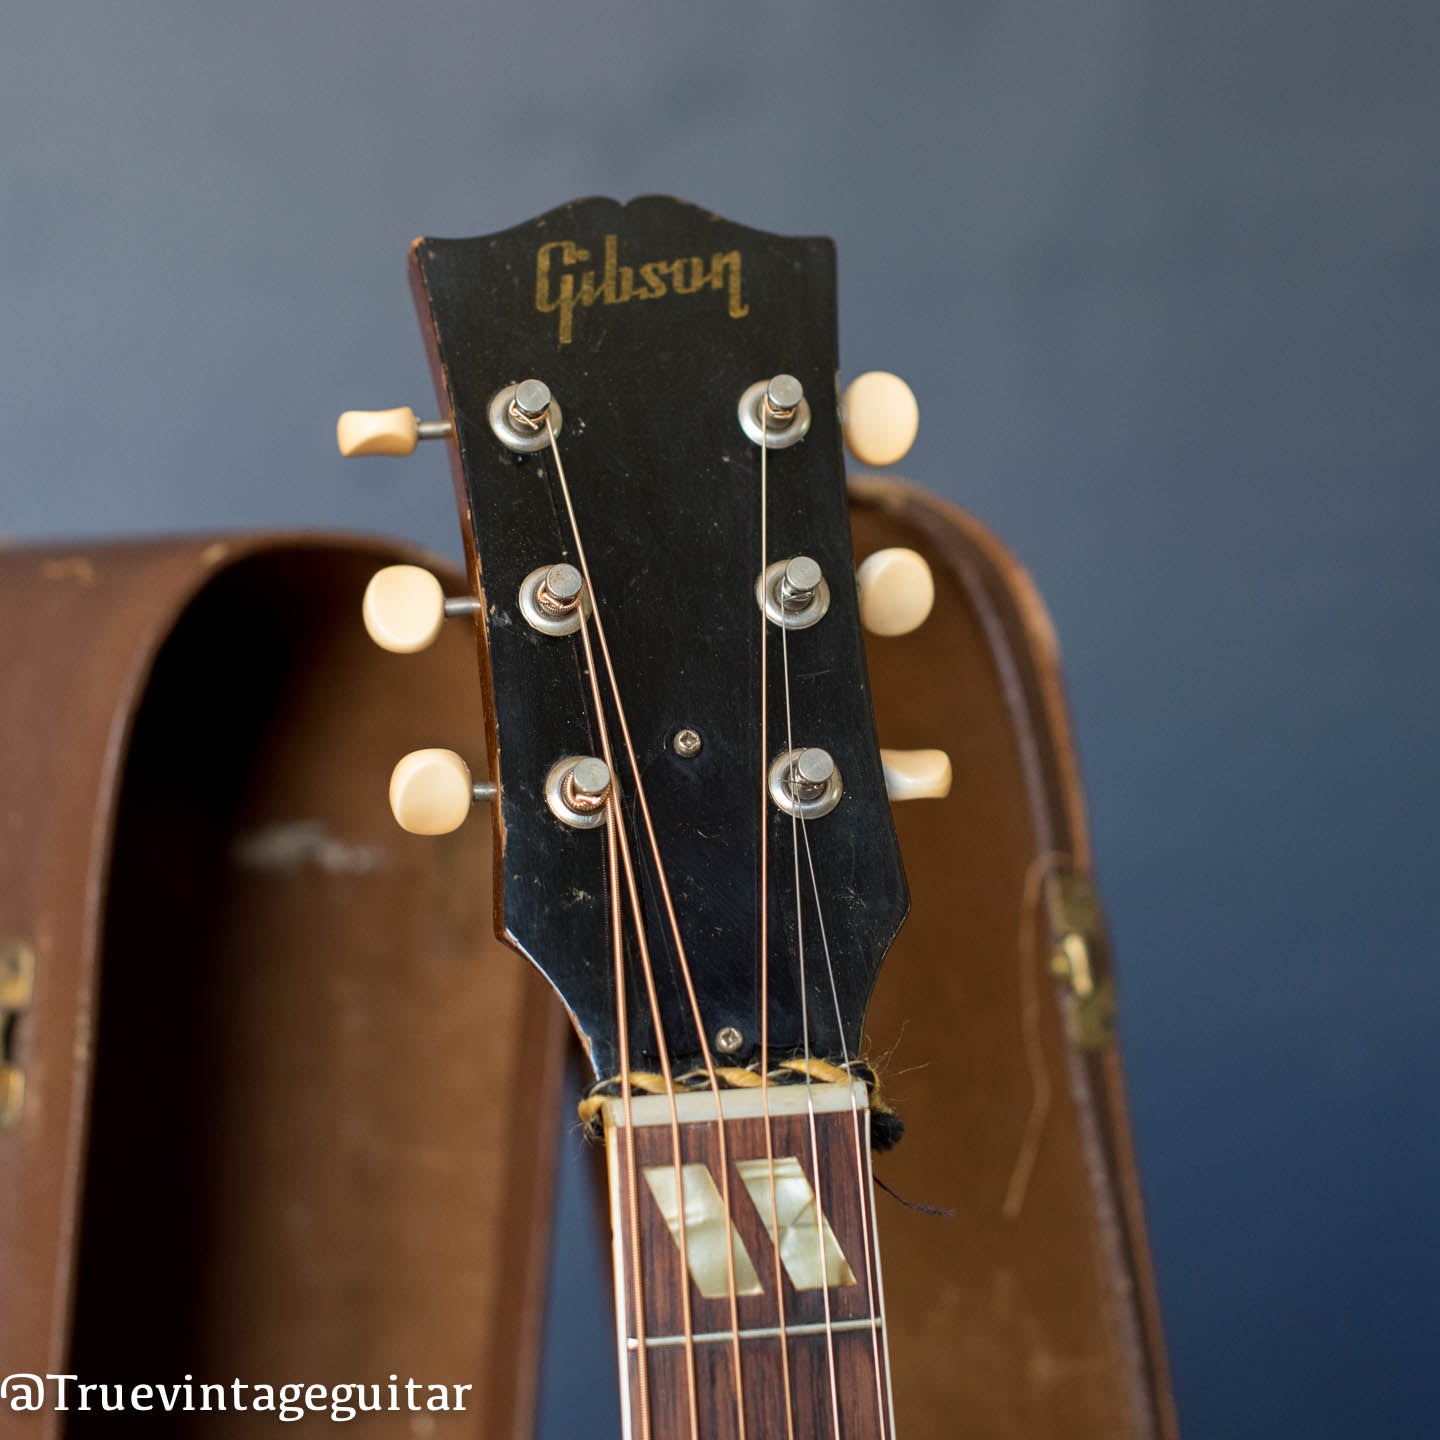 Gibson headstock, 1951 Gibson SJ guitar